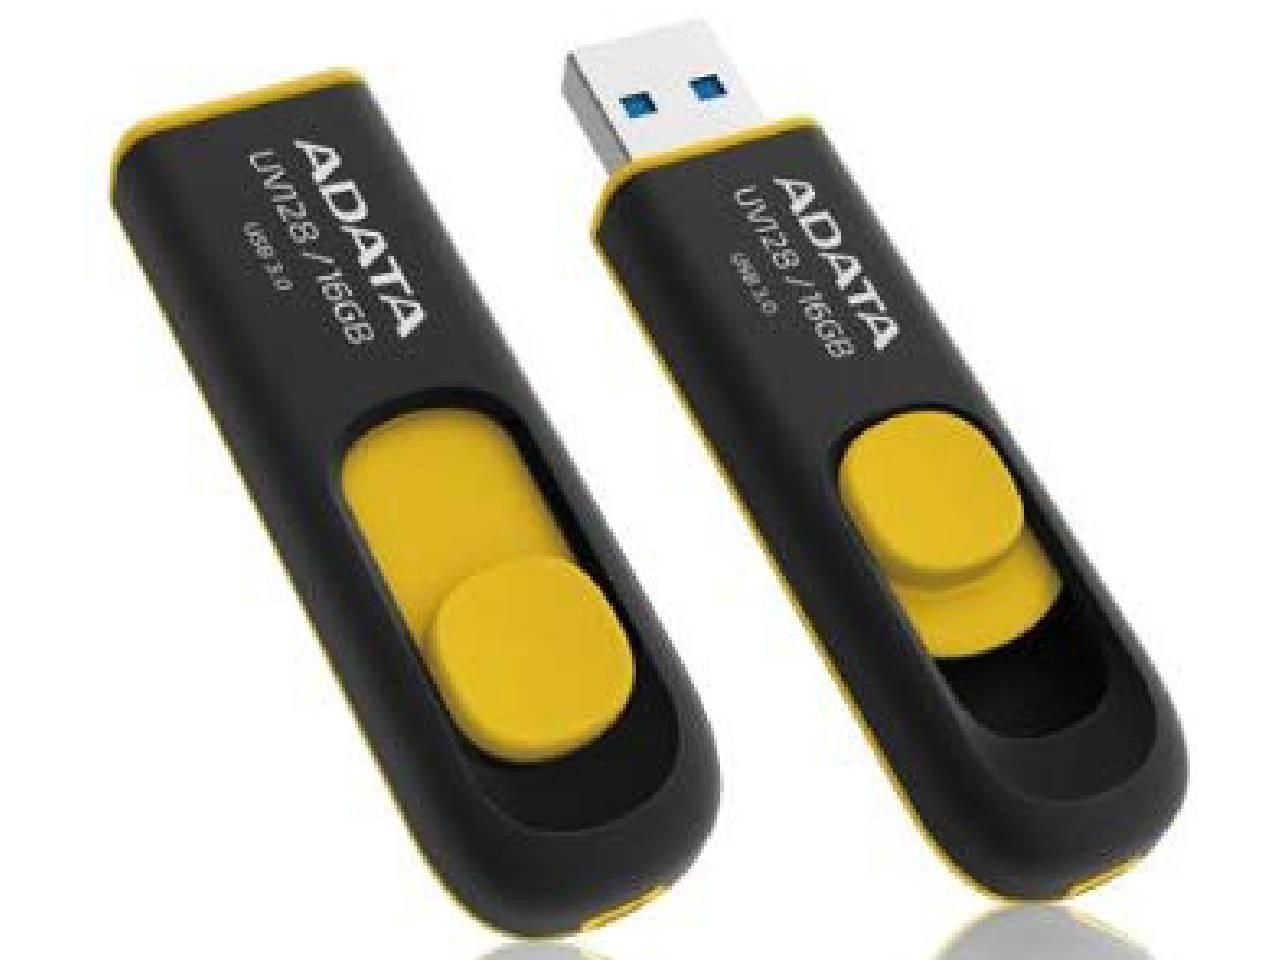 USB 3.0 Retractable Capless Flash Drive, High Performance USB Flash